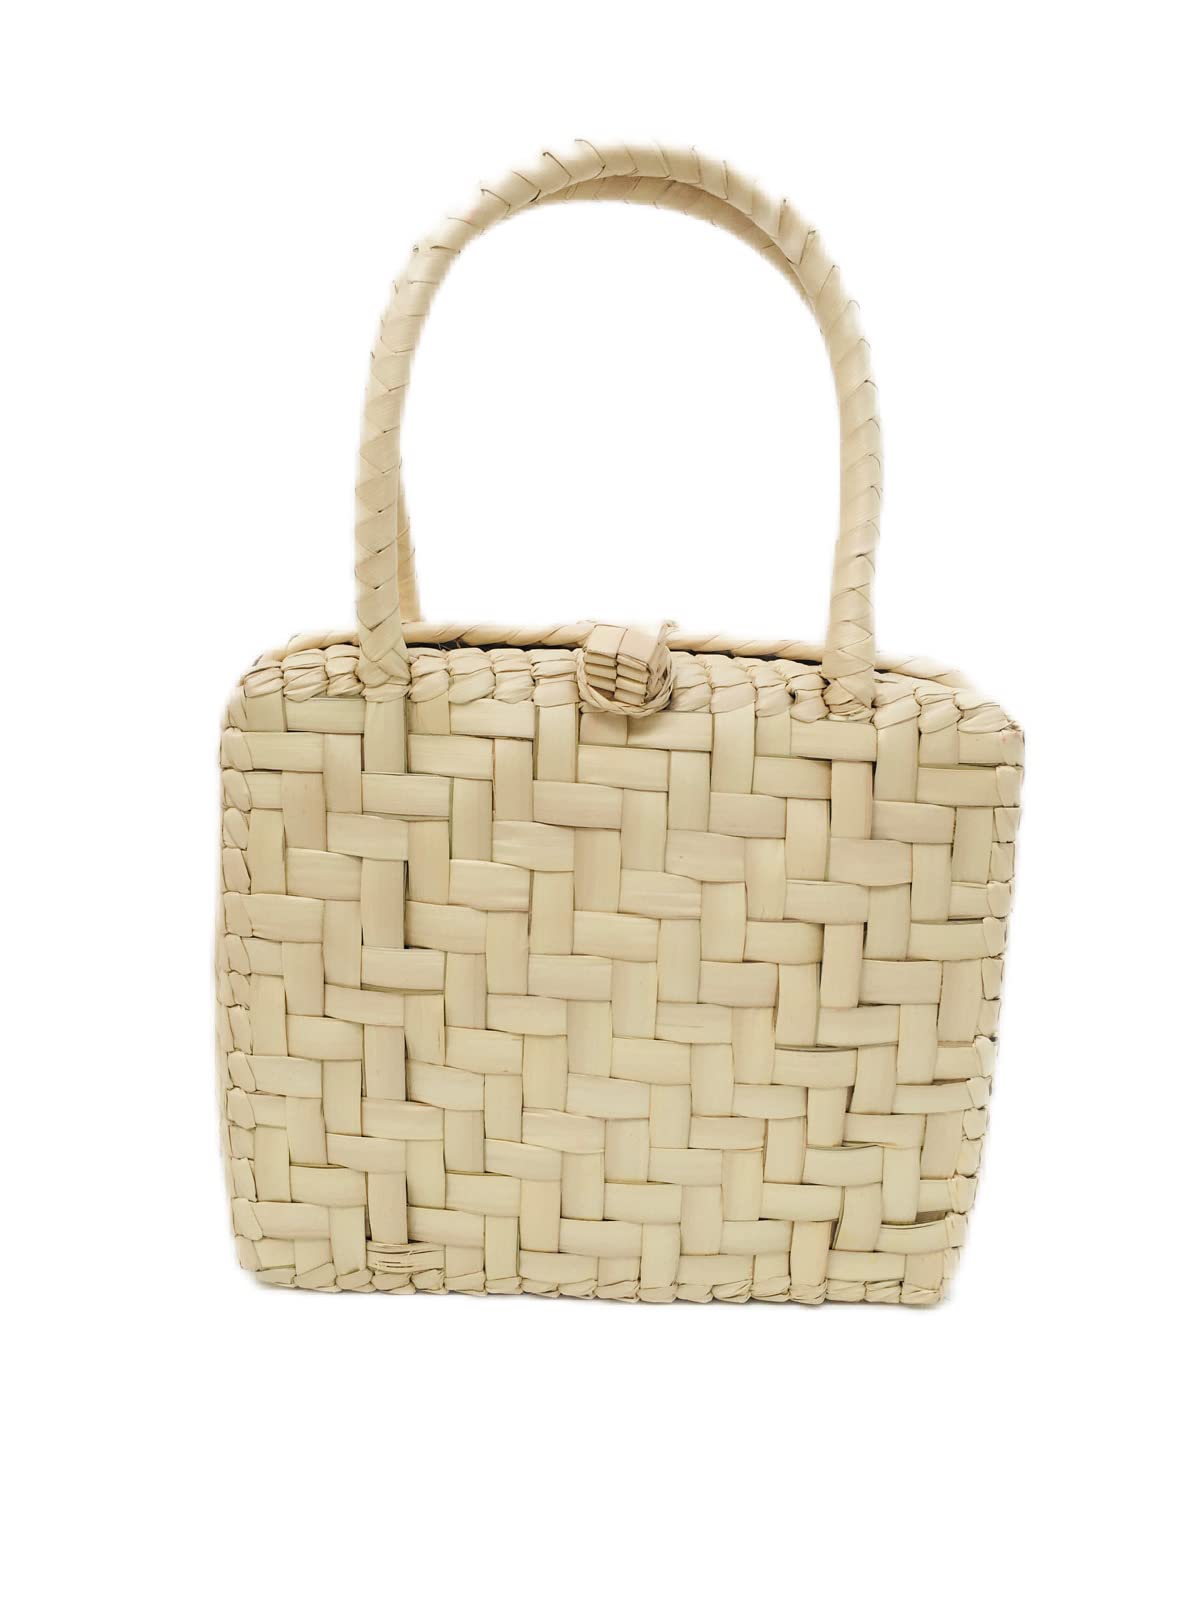 Mexican Bag Made Of Natural Palm/Briefcase/Woven Palm Bag/Palm Bag/Super original color beige palm bag